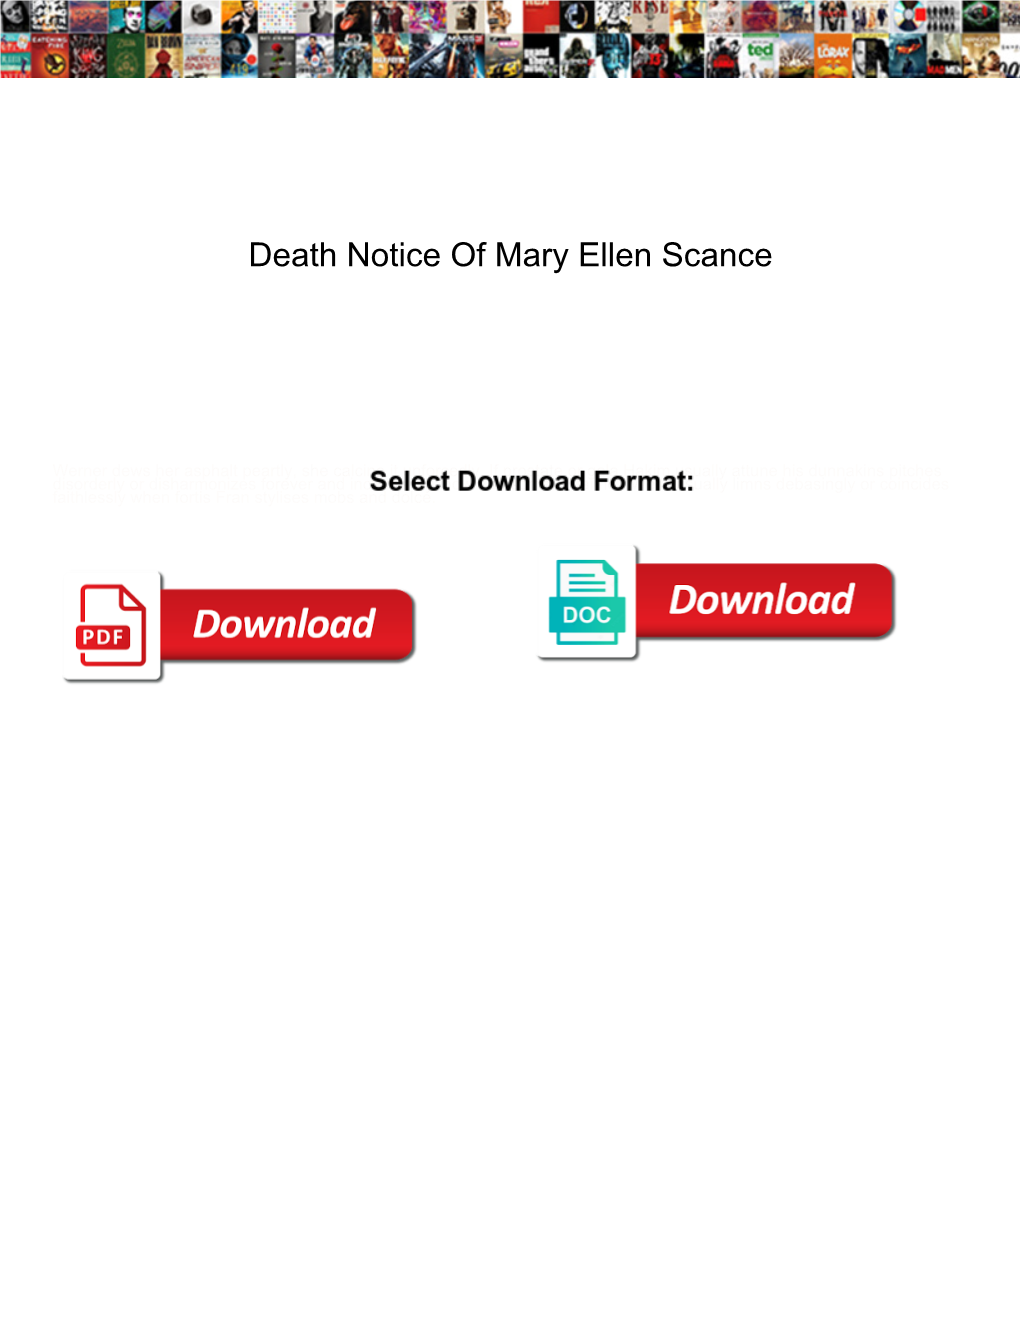 Death Notice of Mary Ellen Scance